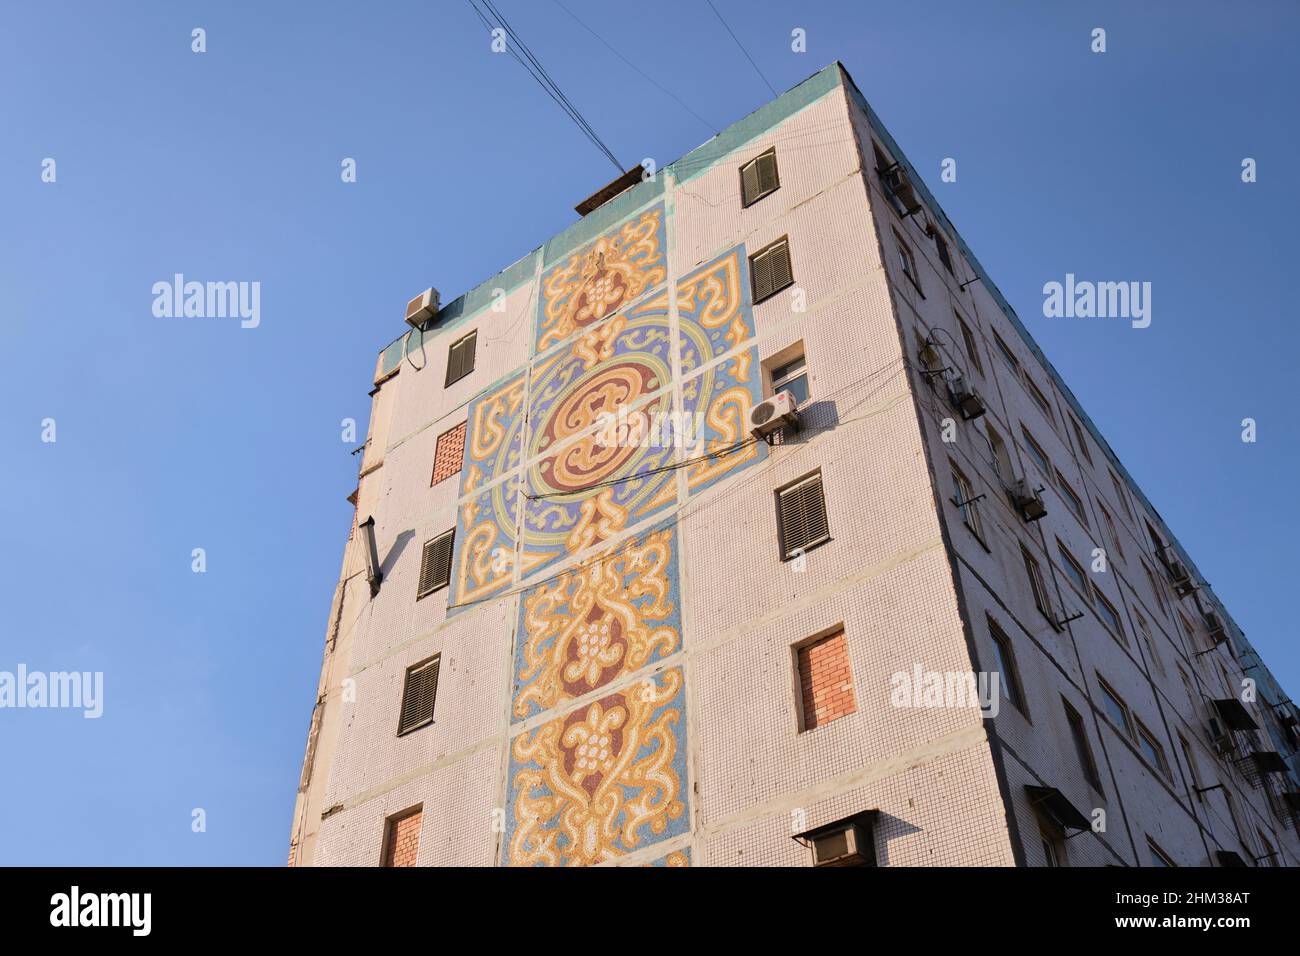 Soviet, Russian, USSR, CCCP era huge art mosaic tile mural shaped like a cross on the end of a large apartment building. In Tashkent, Uzbekistan. Stock Photo